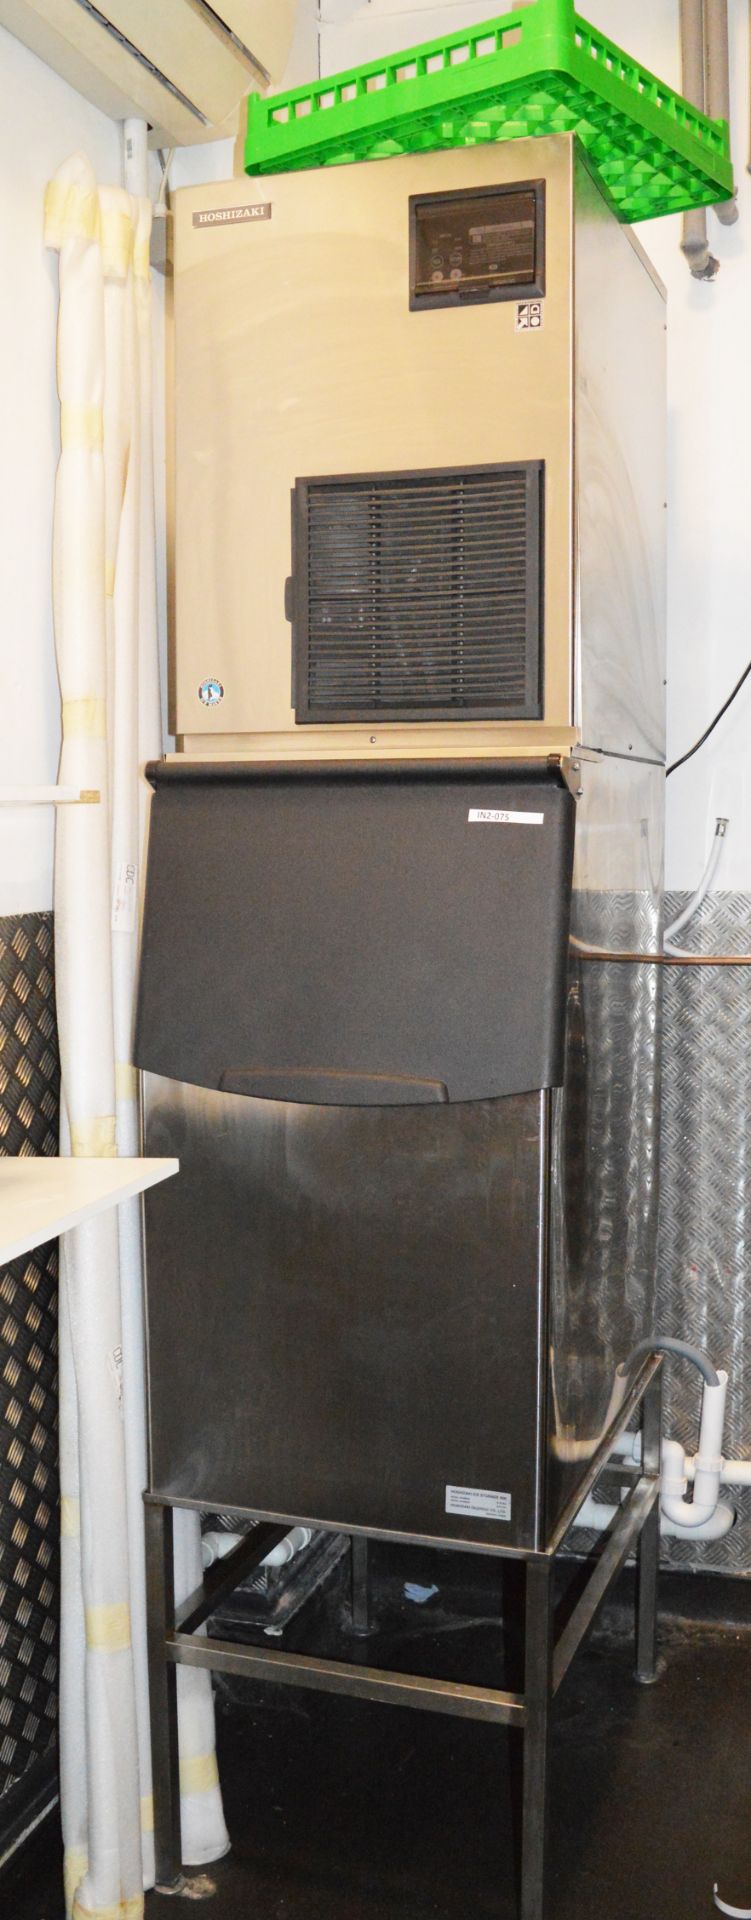 1 x Hoshizaki Air Cool Ice Maker Modular Storage Bin - Impressive 144kg Storage Capacity -